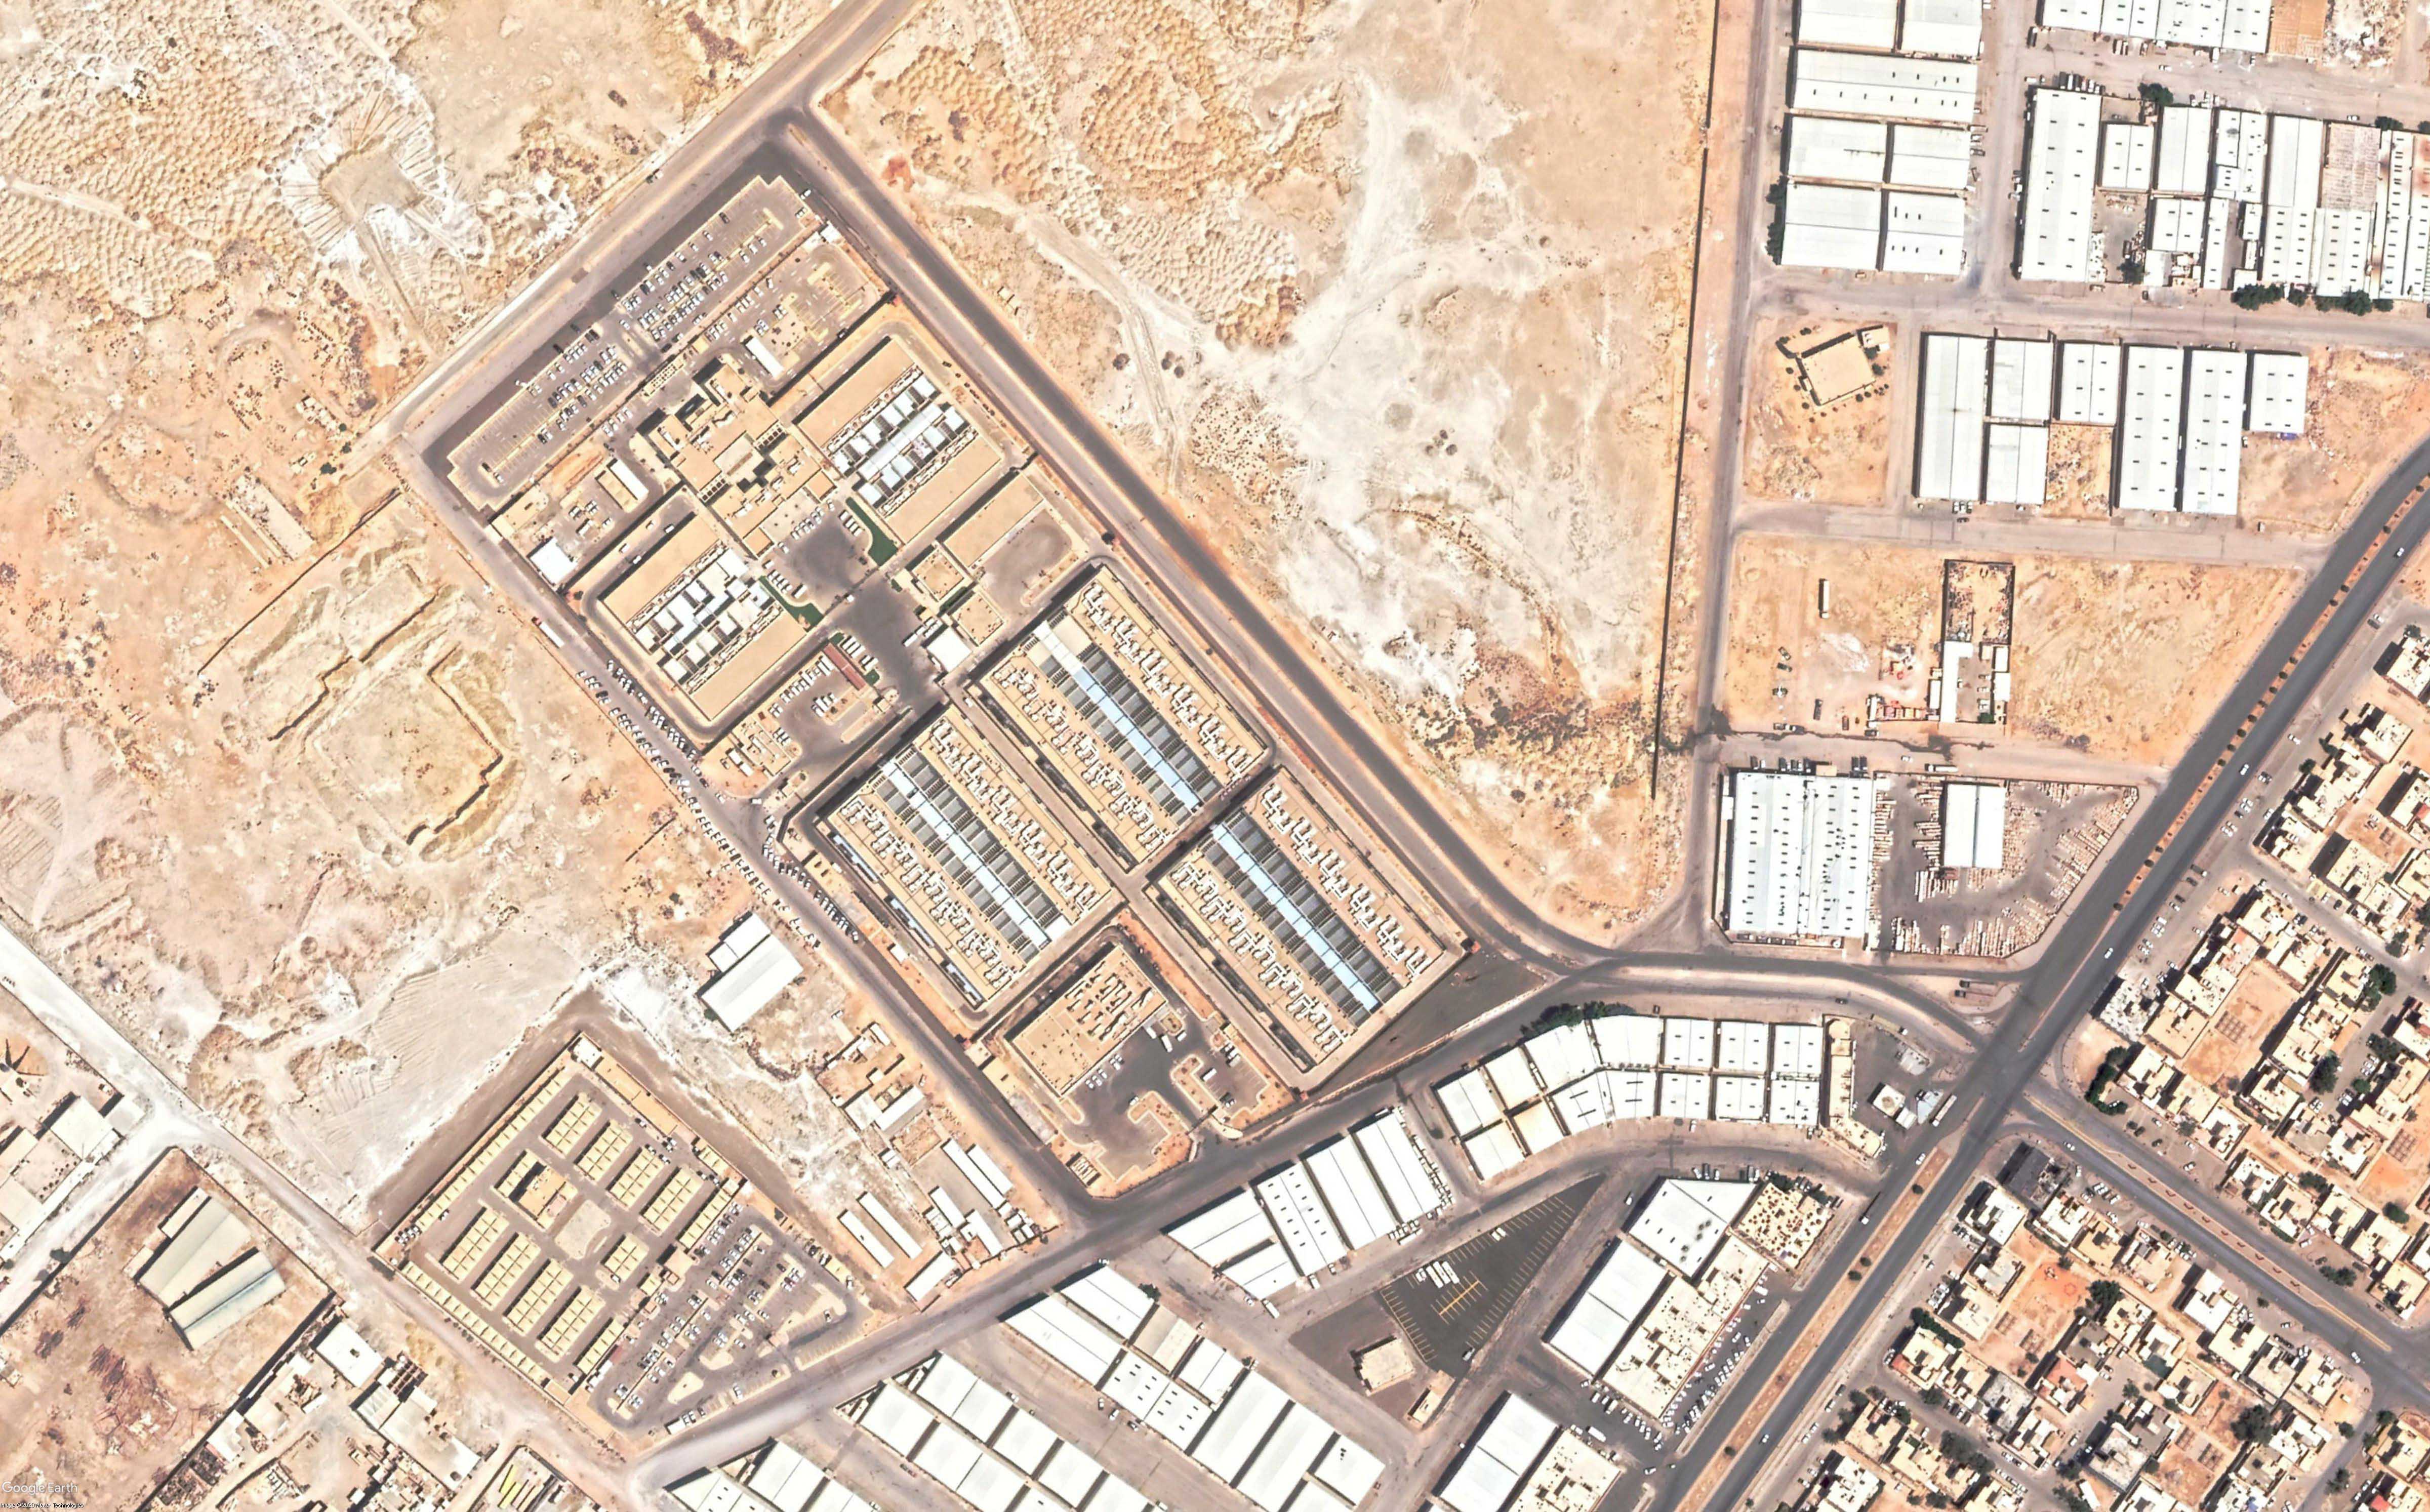 Security complex in Riyadh, Saudi Arabia identified by Human Rights Watch. Satellite image ©️ 2020 Maxar Technologies. Source: Google Earth